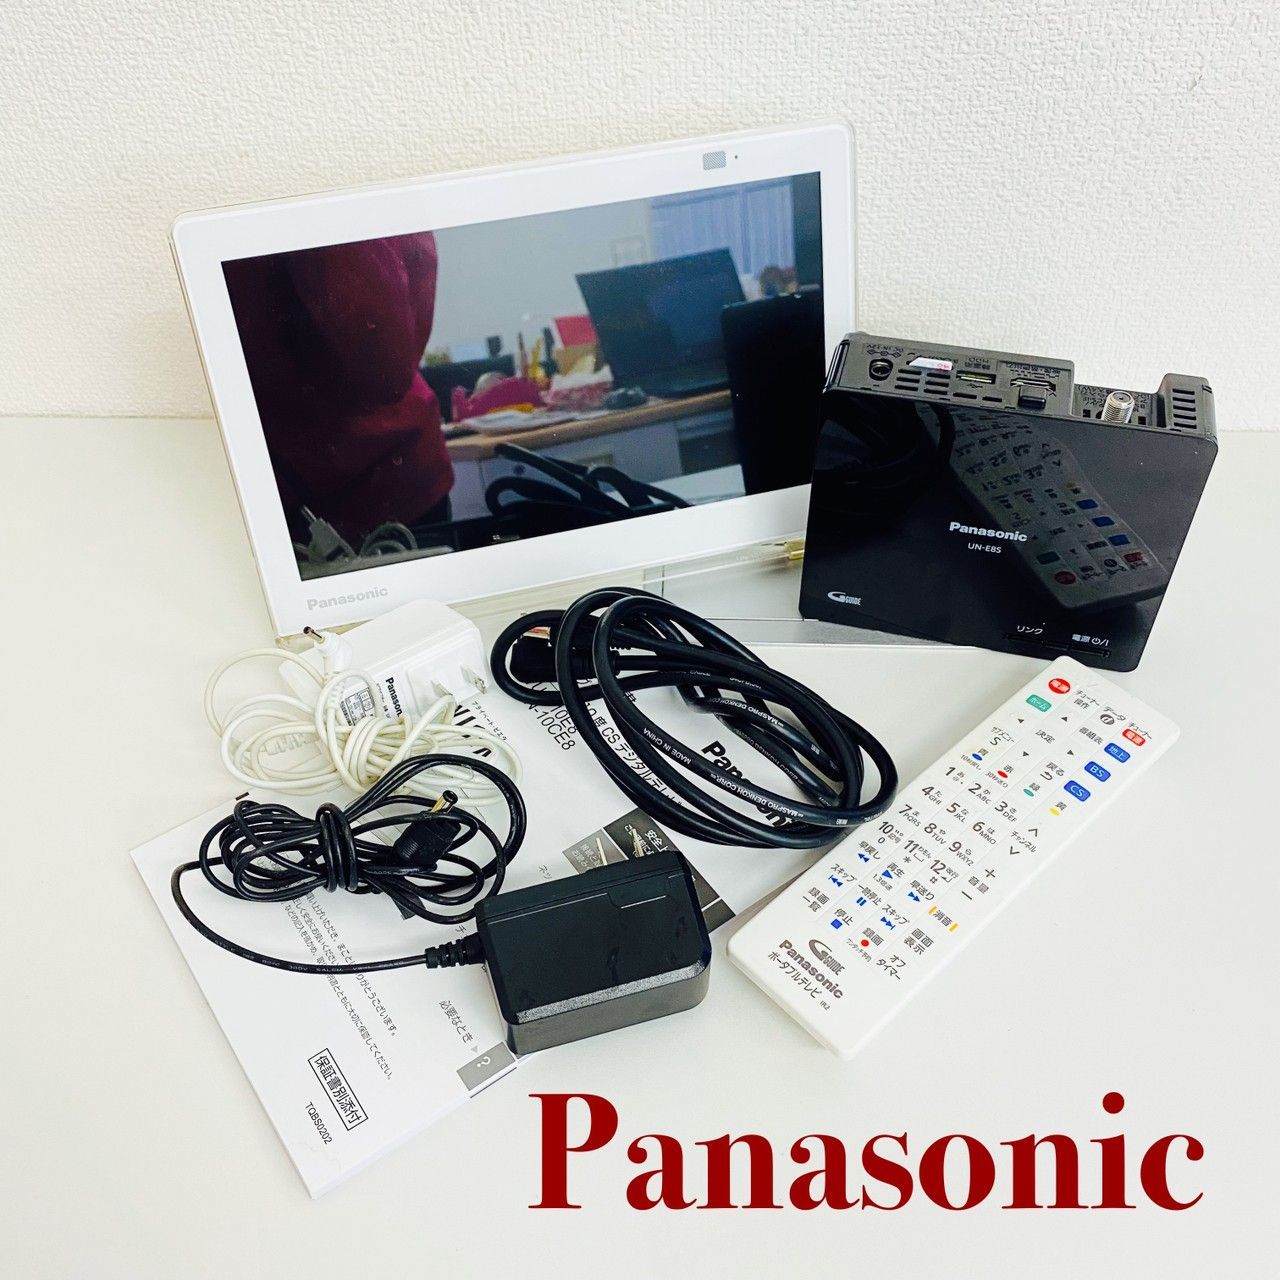 Panasonic private viera プライベートビエラ ポータルテレビ 説明書付き